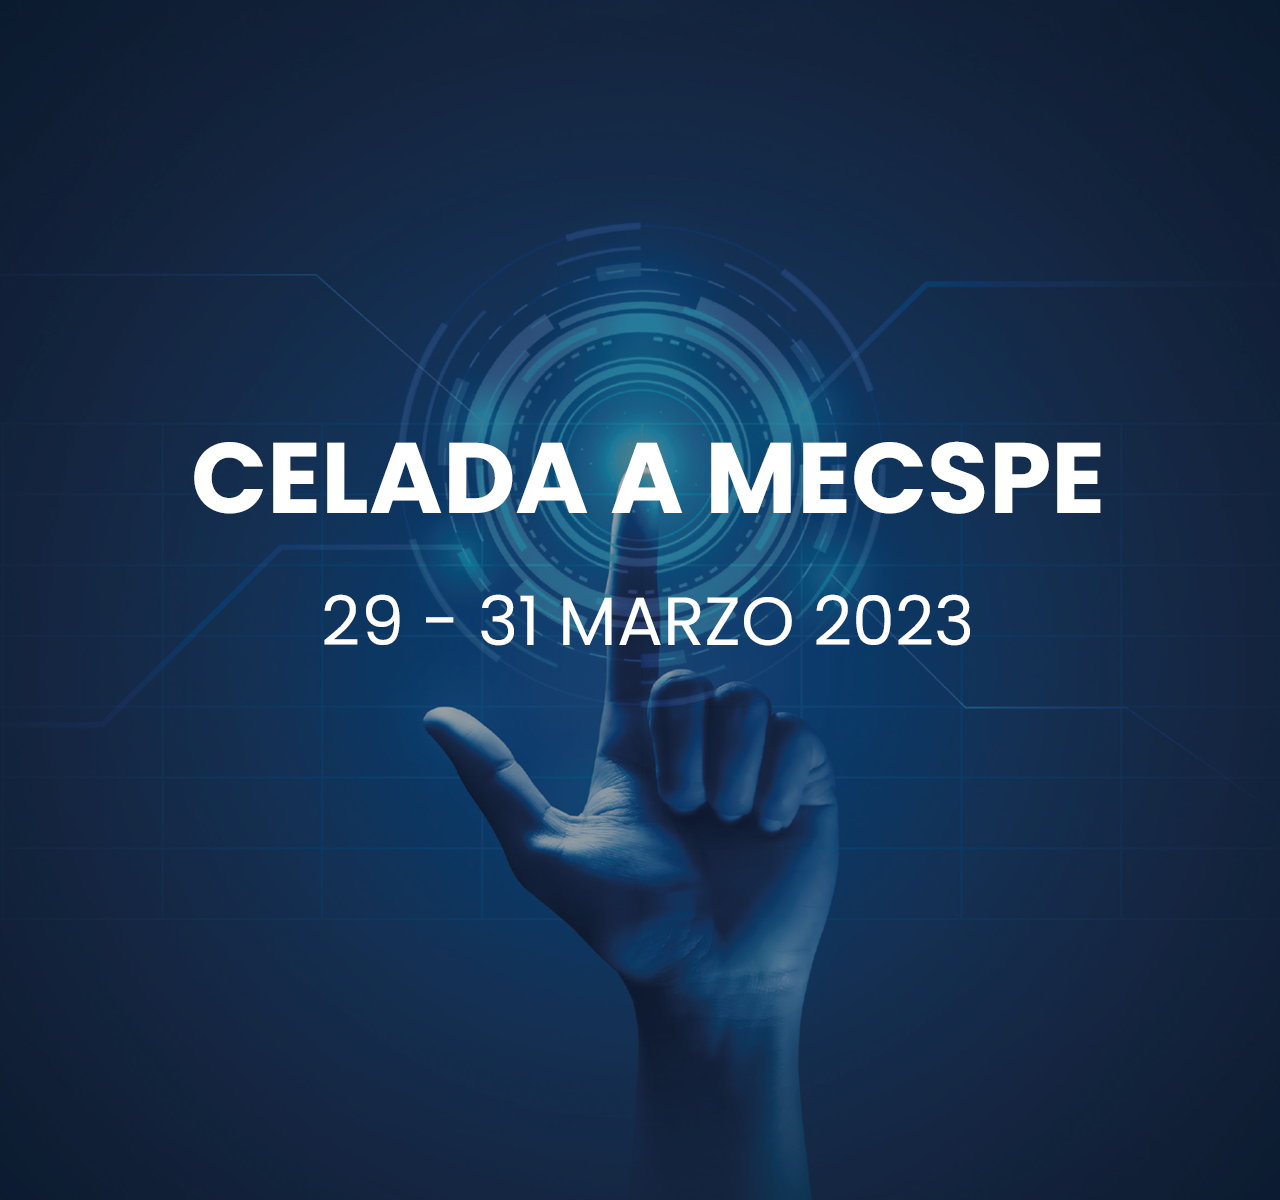 CELADA A MECSPE 2023